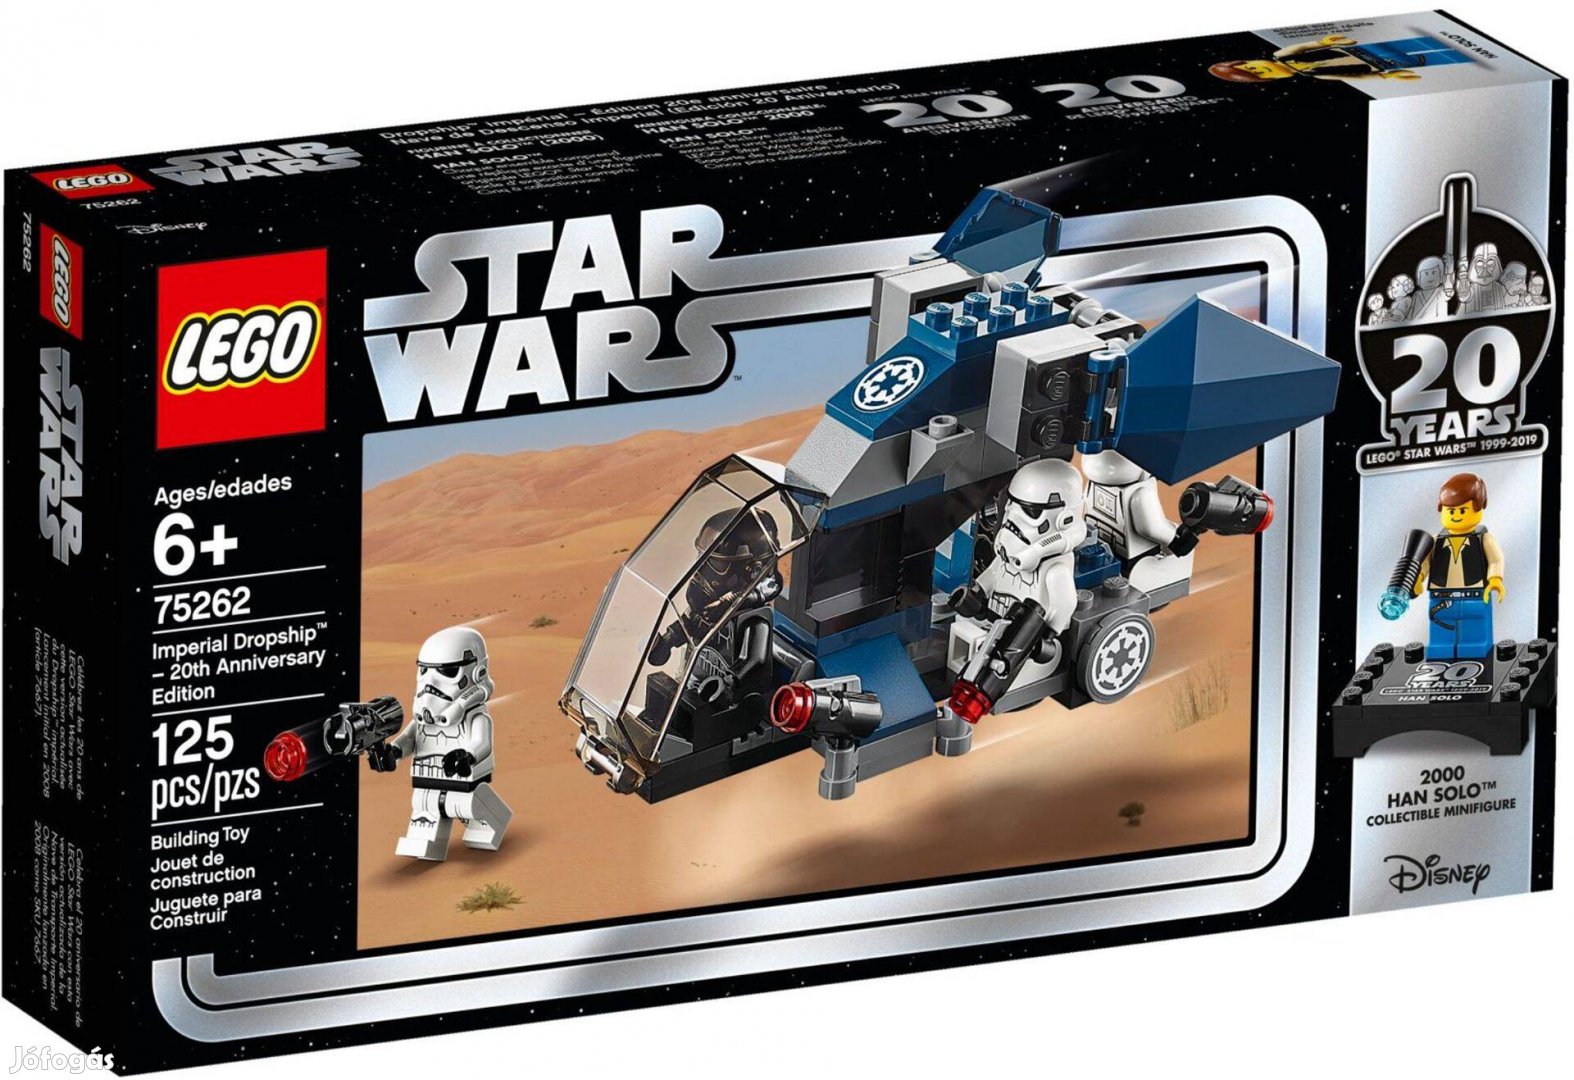 LEGO Star Wars 75262 Imperial Dropship 20th Anniversary Edition bontat